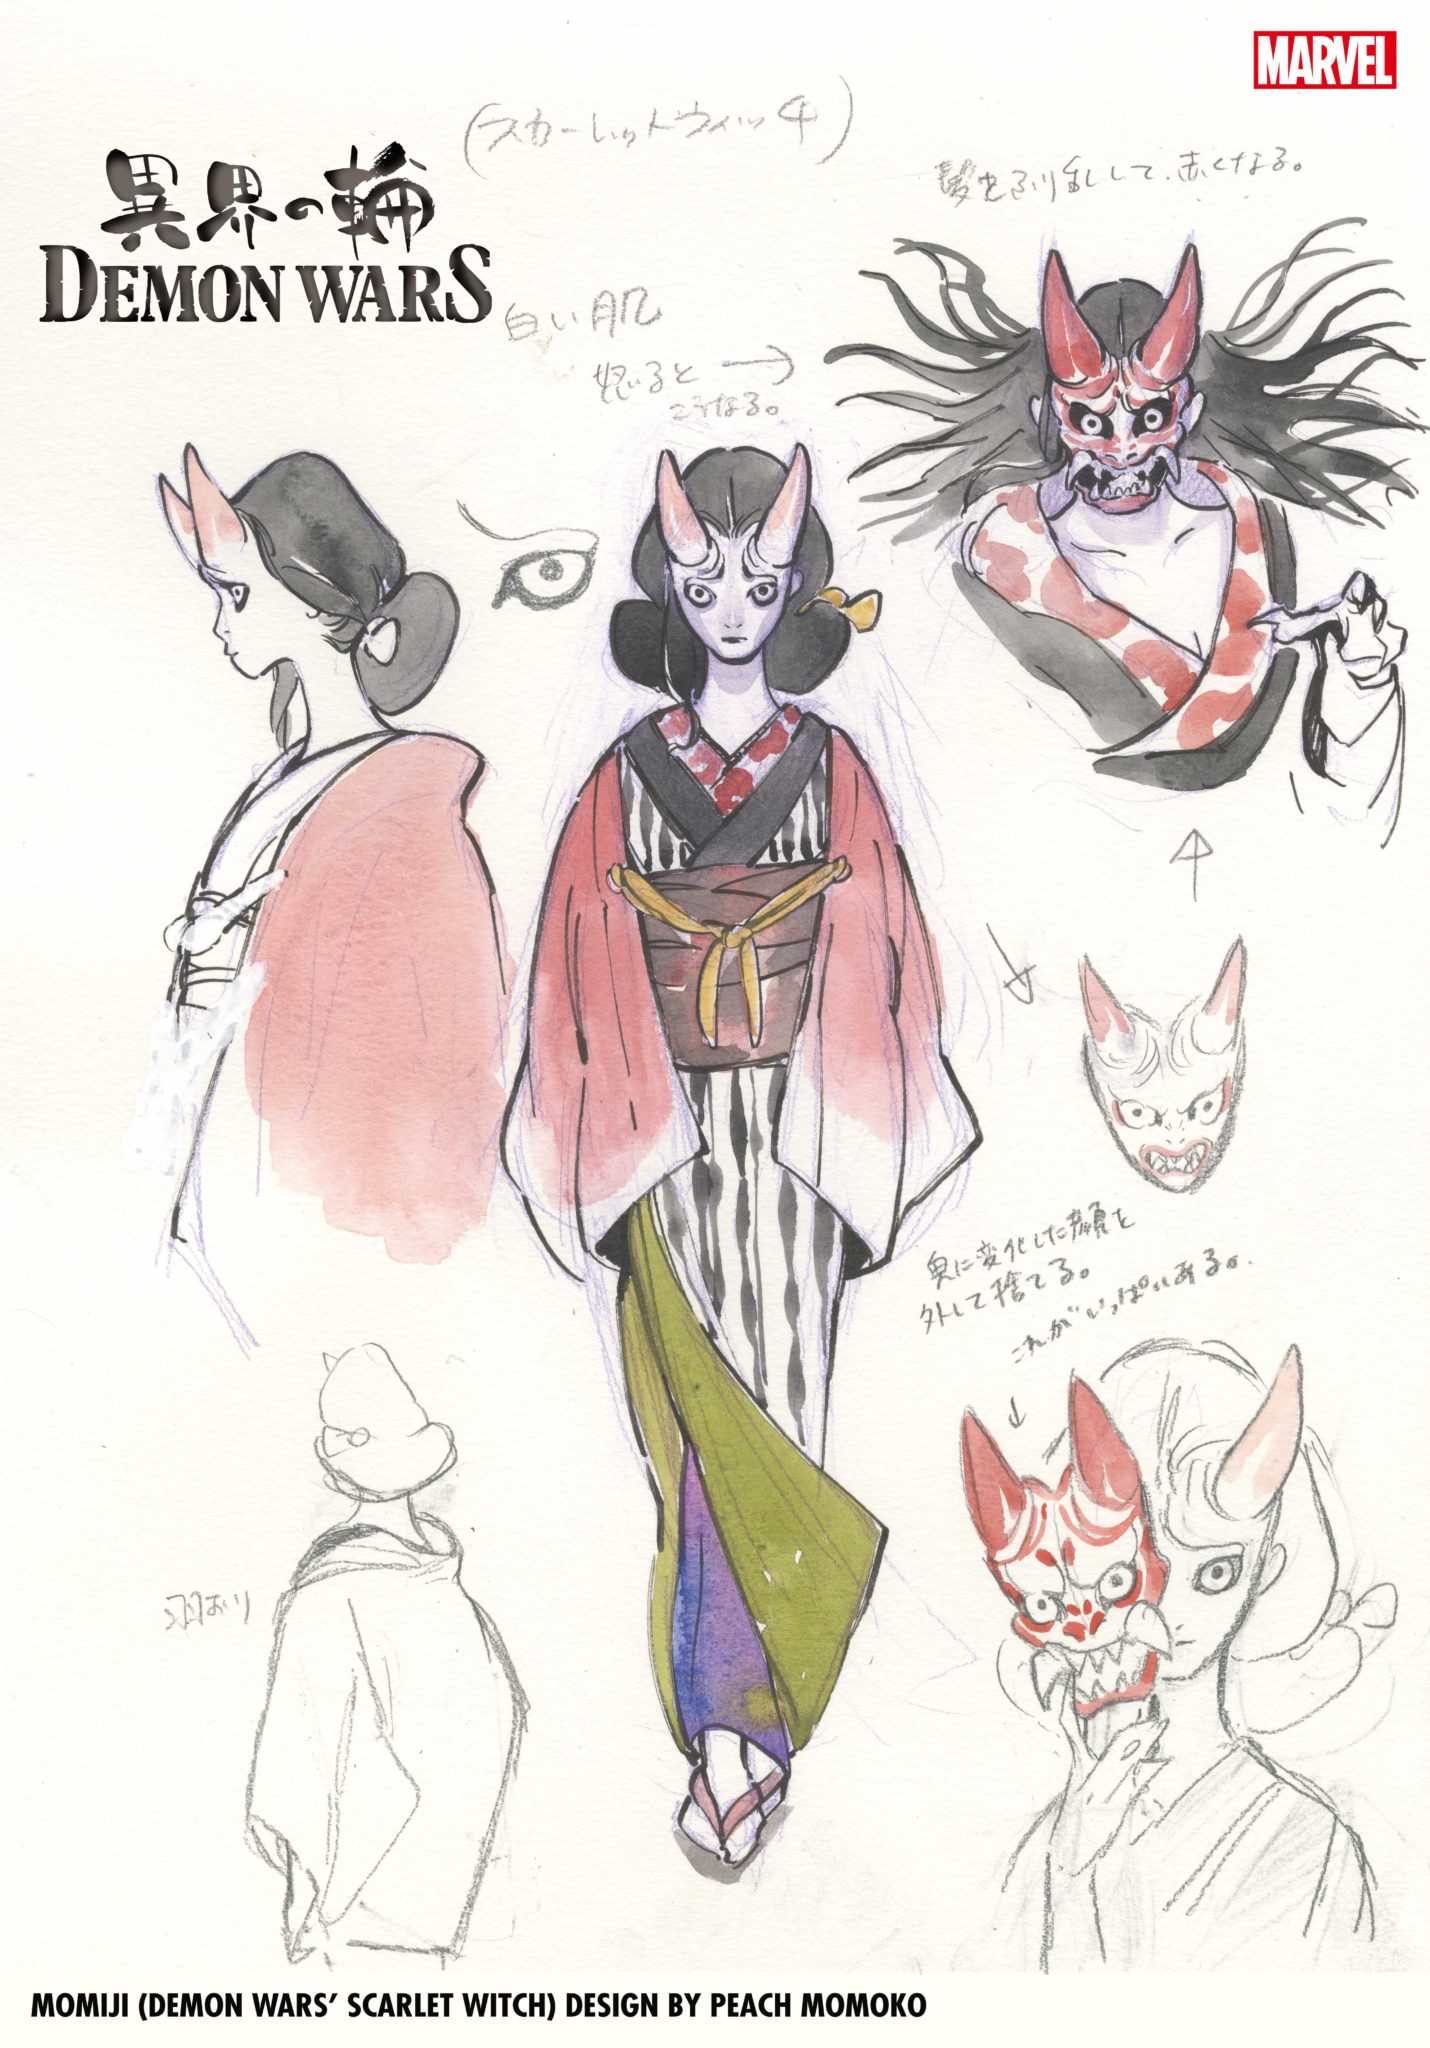 Demon Wars: Scarlet Sin  Design Sheet for Momiji